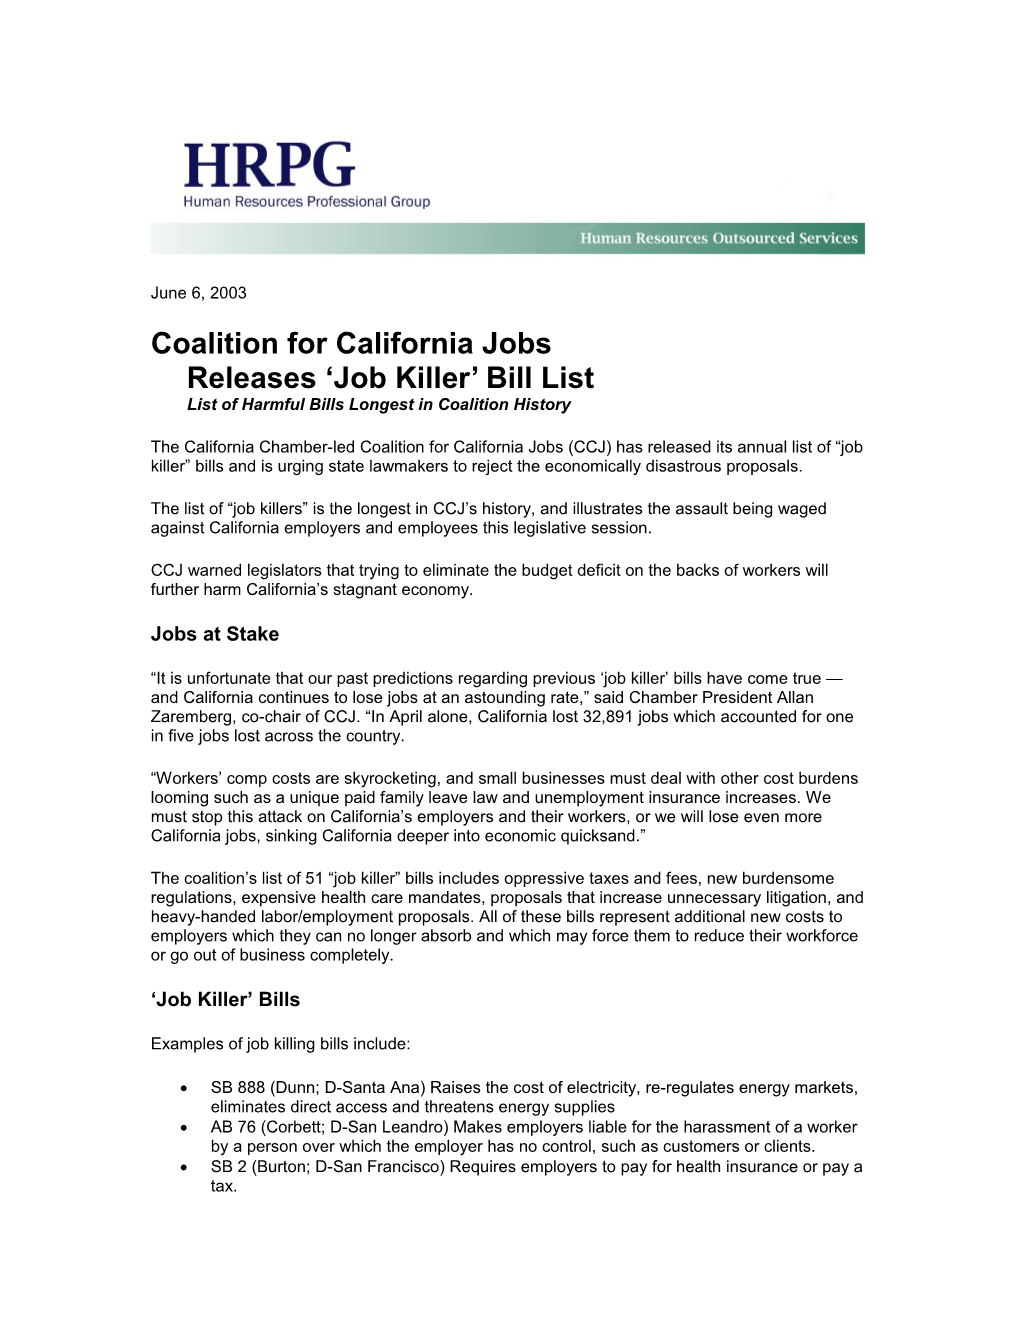 Coalition for California Jobs Releases Job Killer Bill Listlist of Harmful Bills Longest